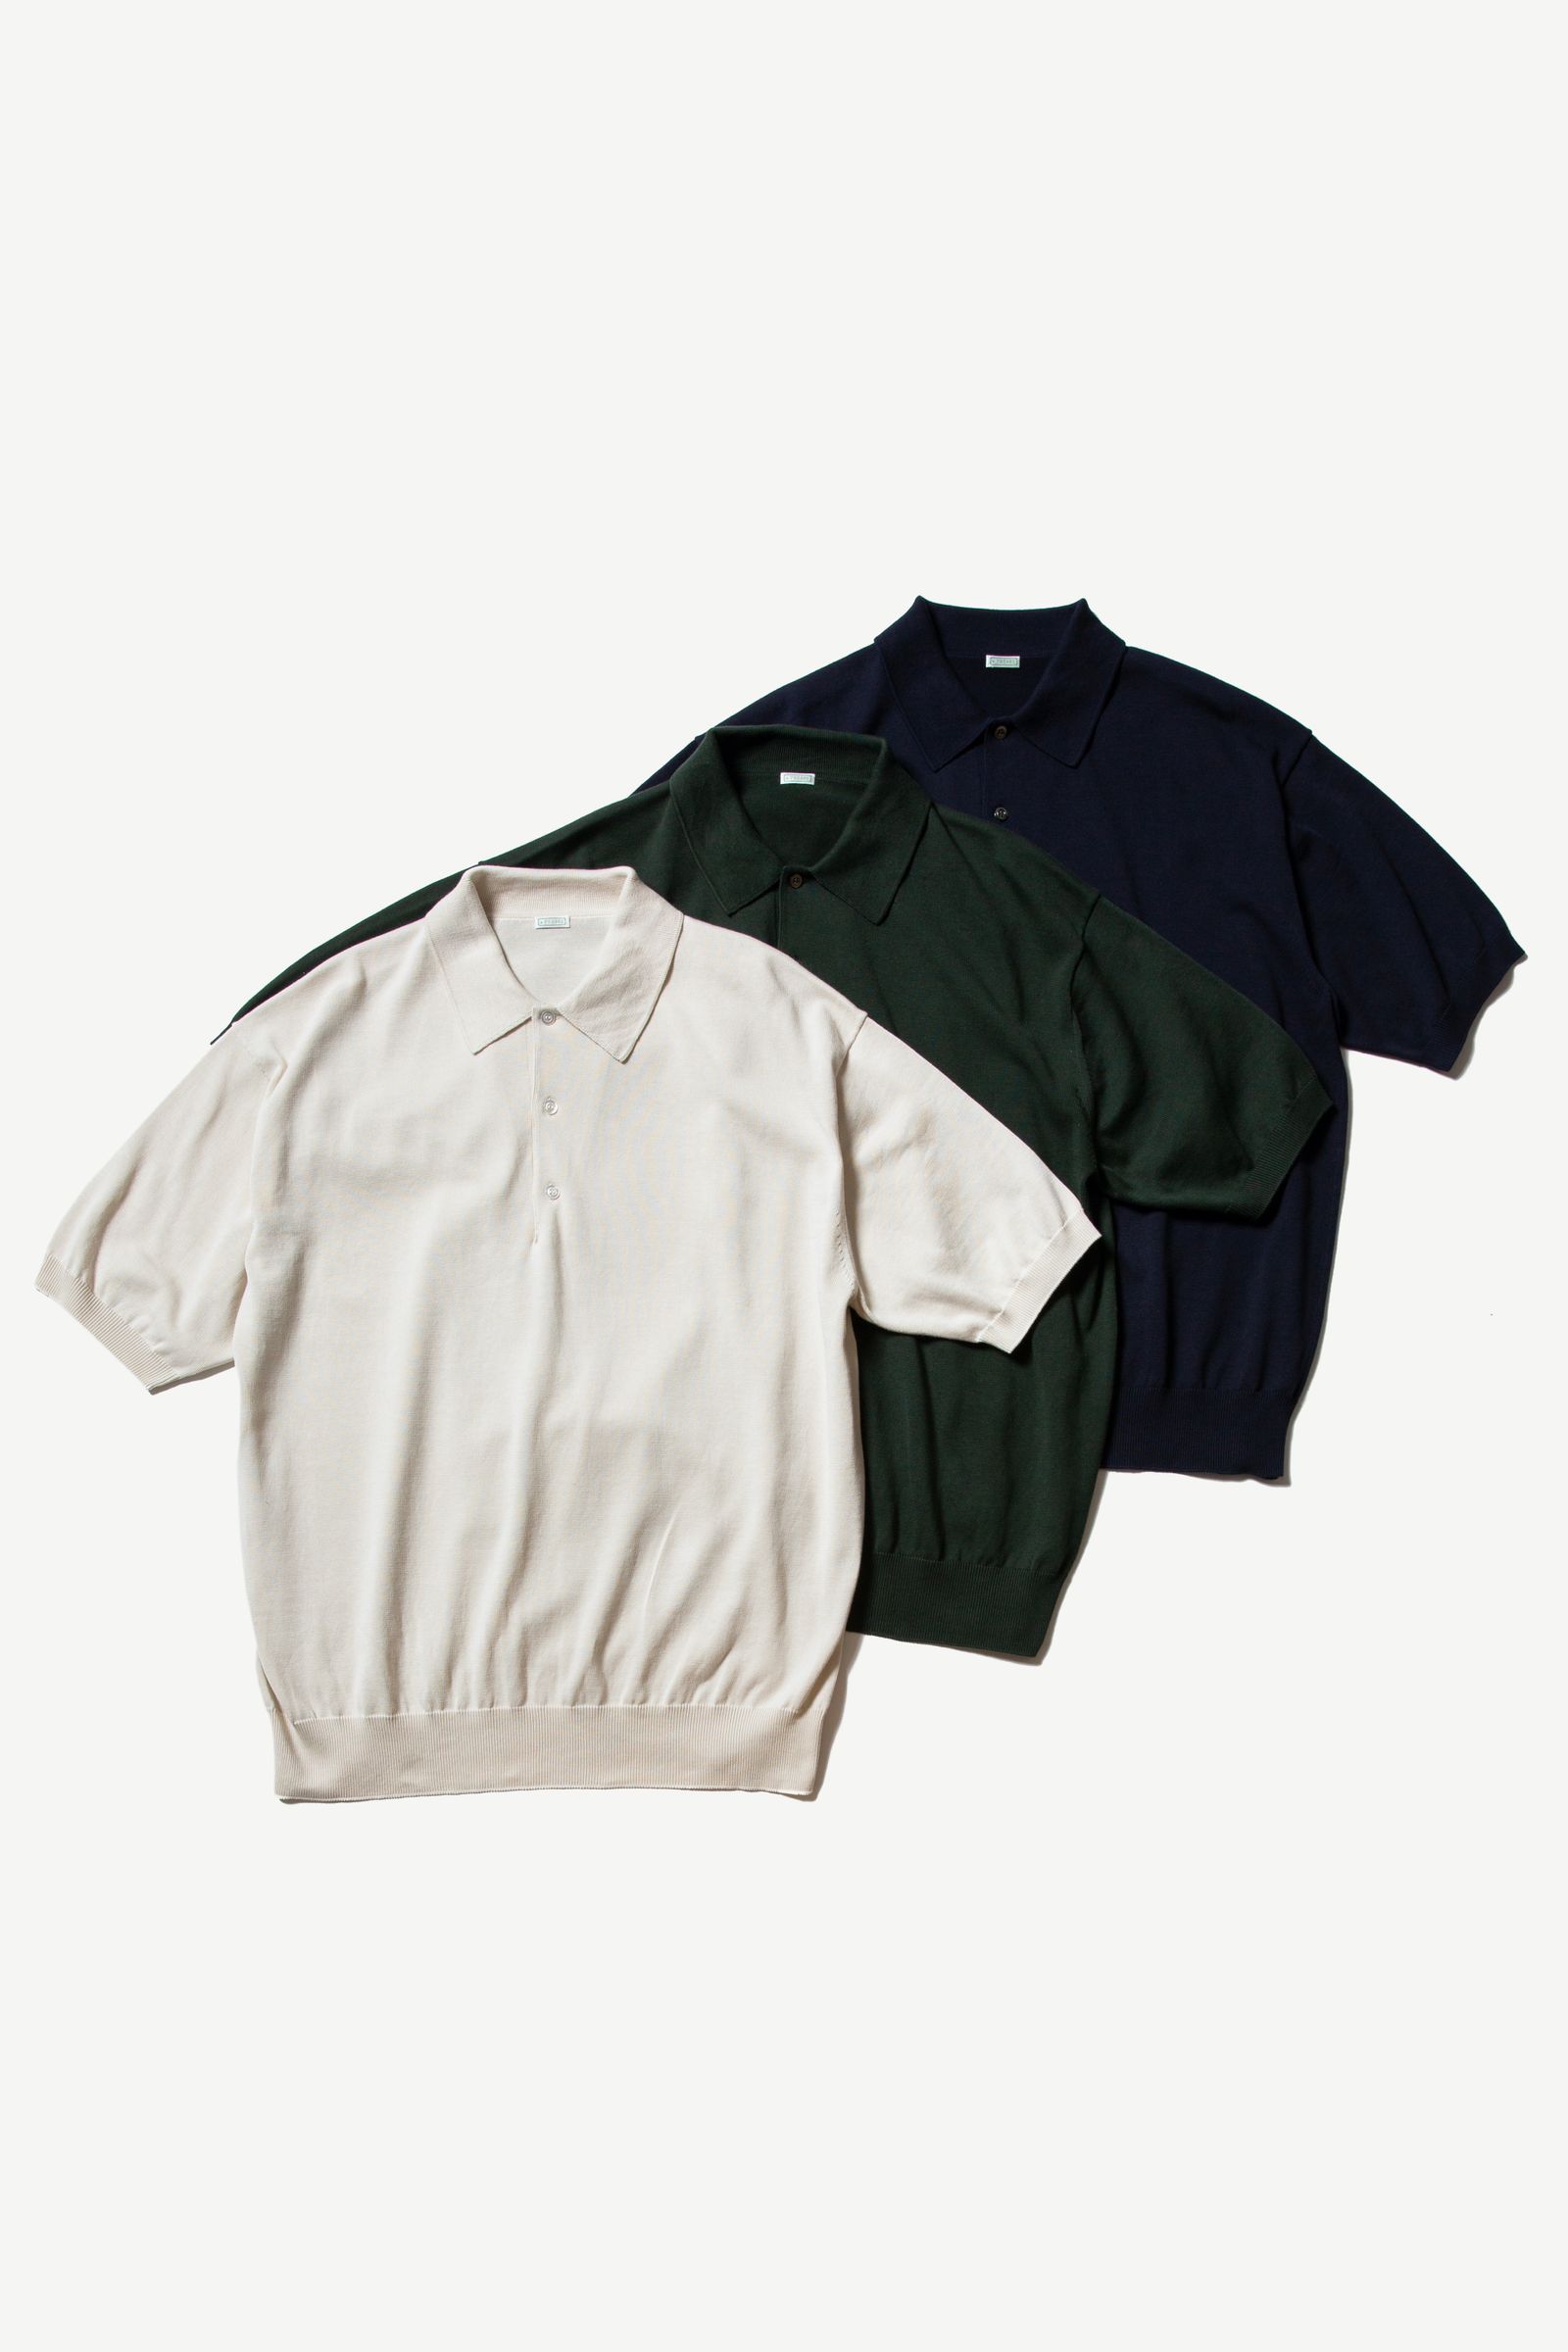 A.PRESSE - cotton knit s/s polo shirts -ecru- 22ss | asterisk